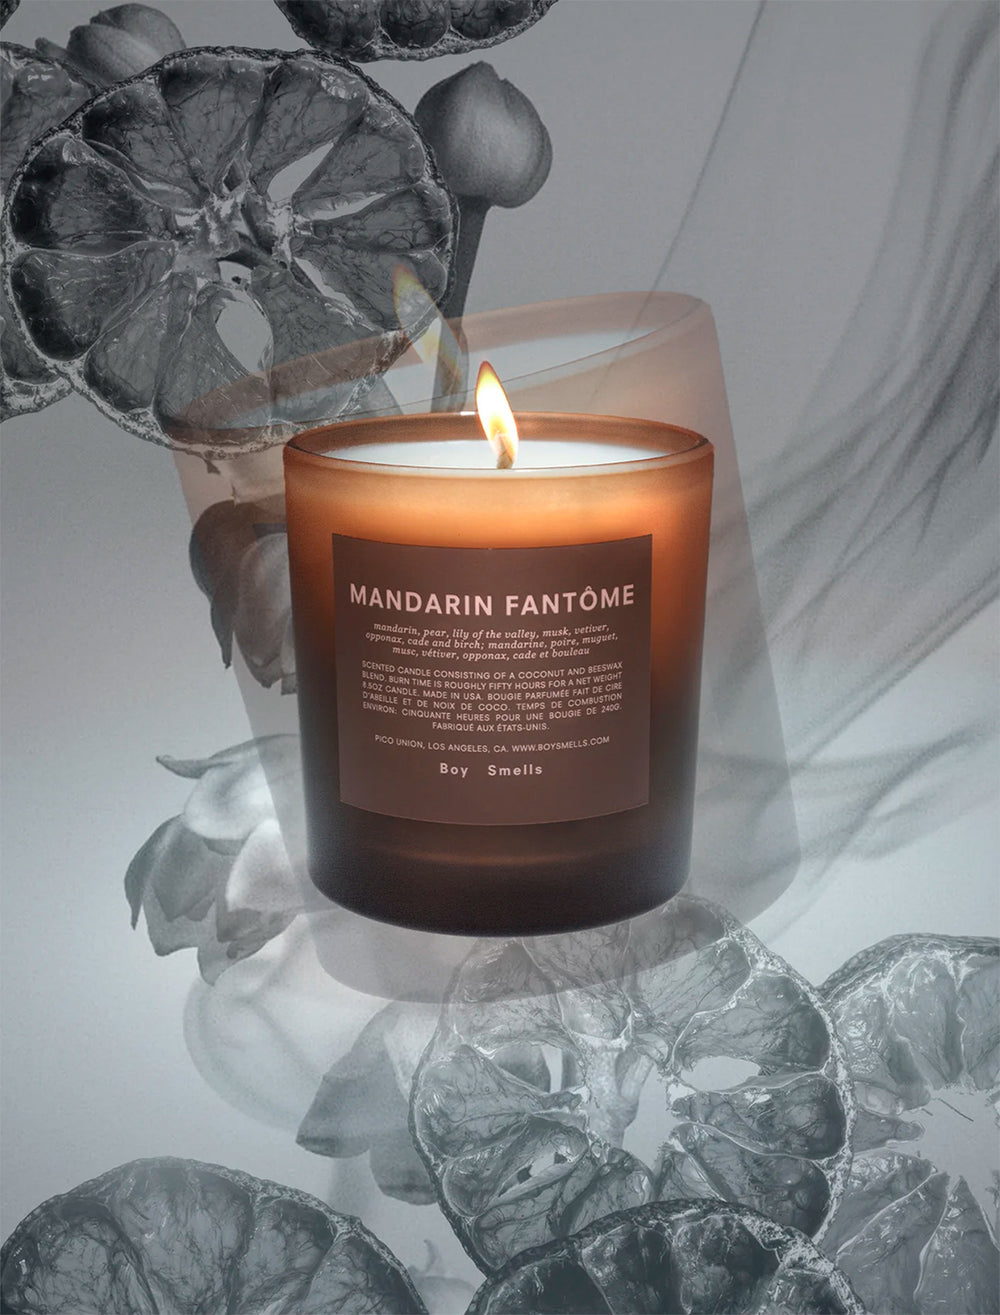 Boy Smells' mandarin fantome candle marketing photo.